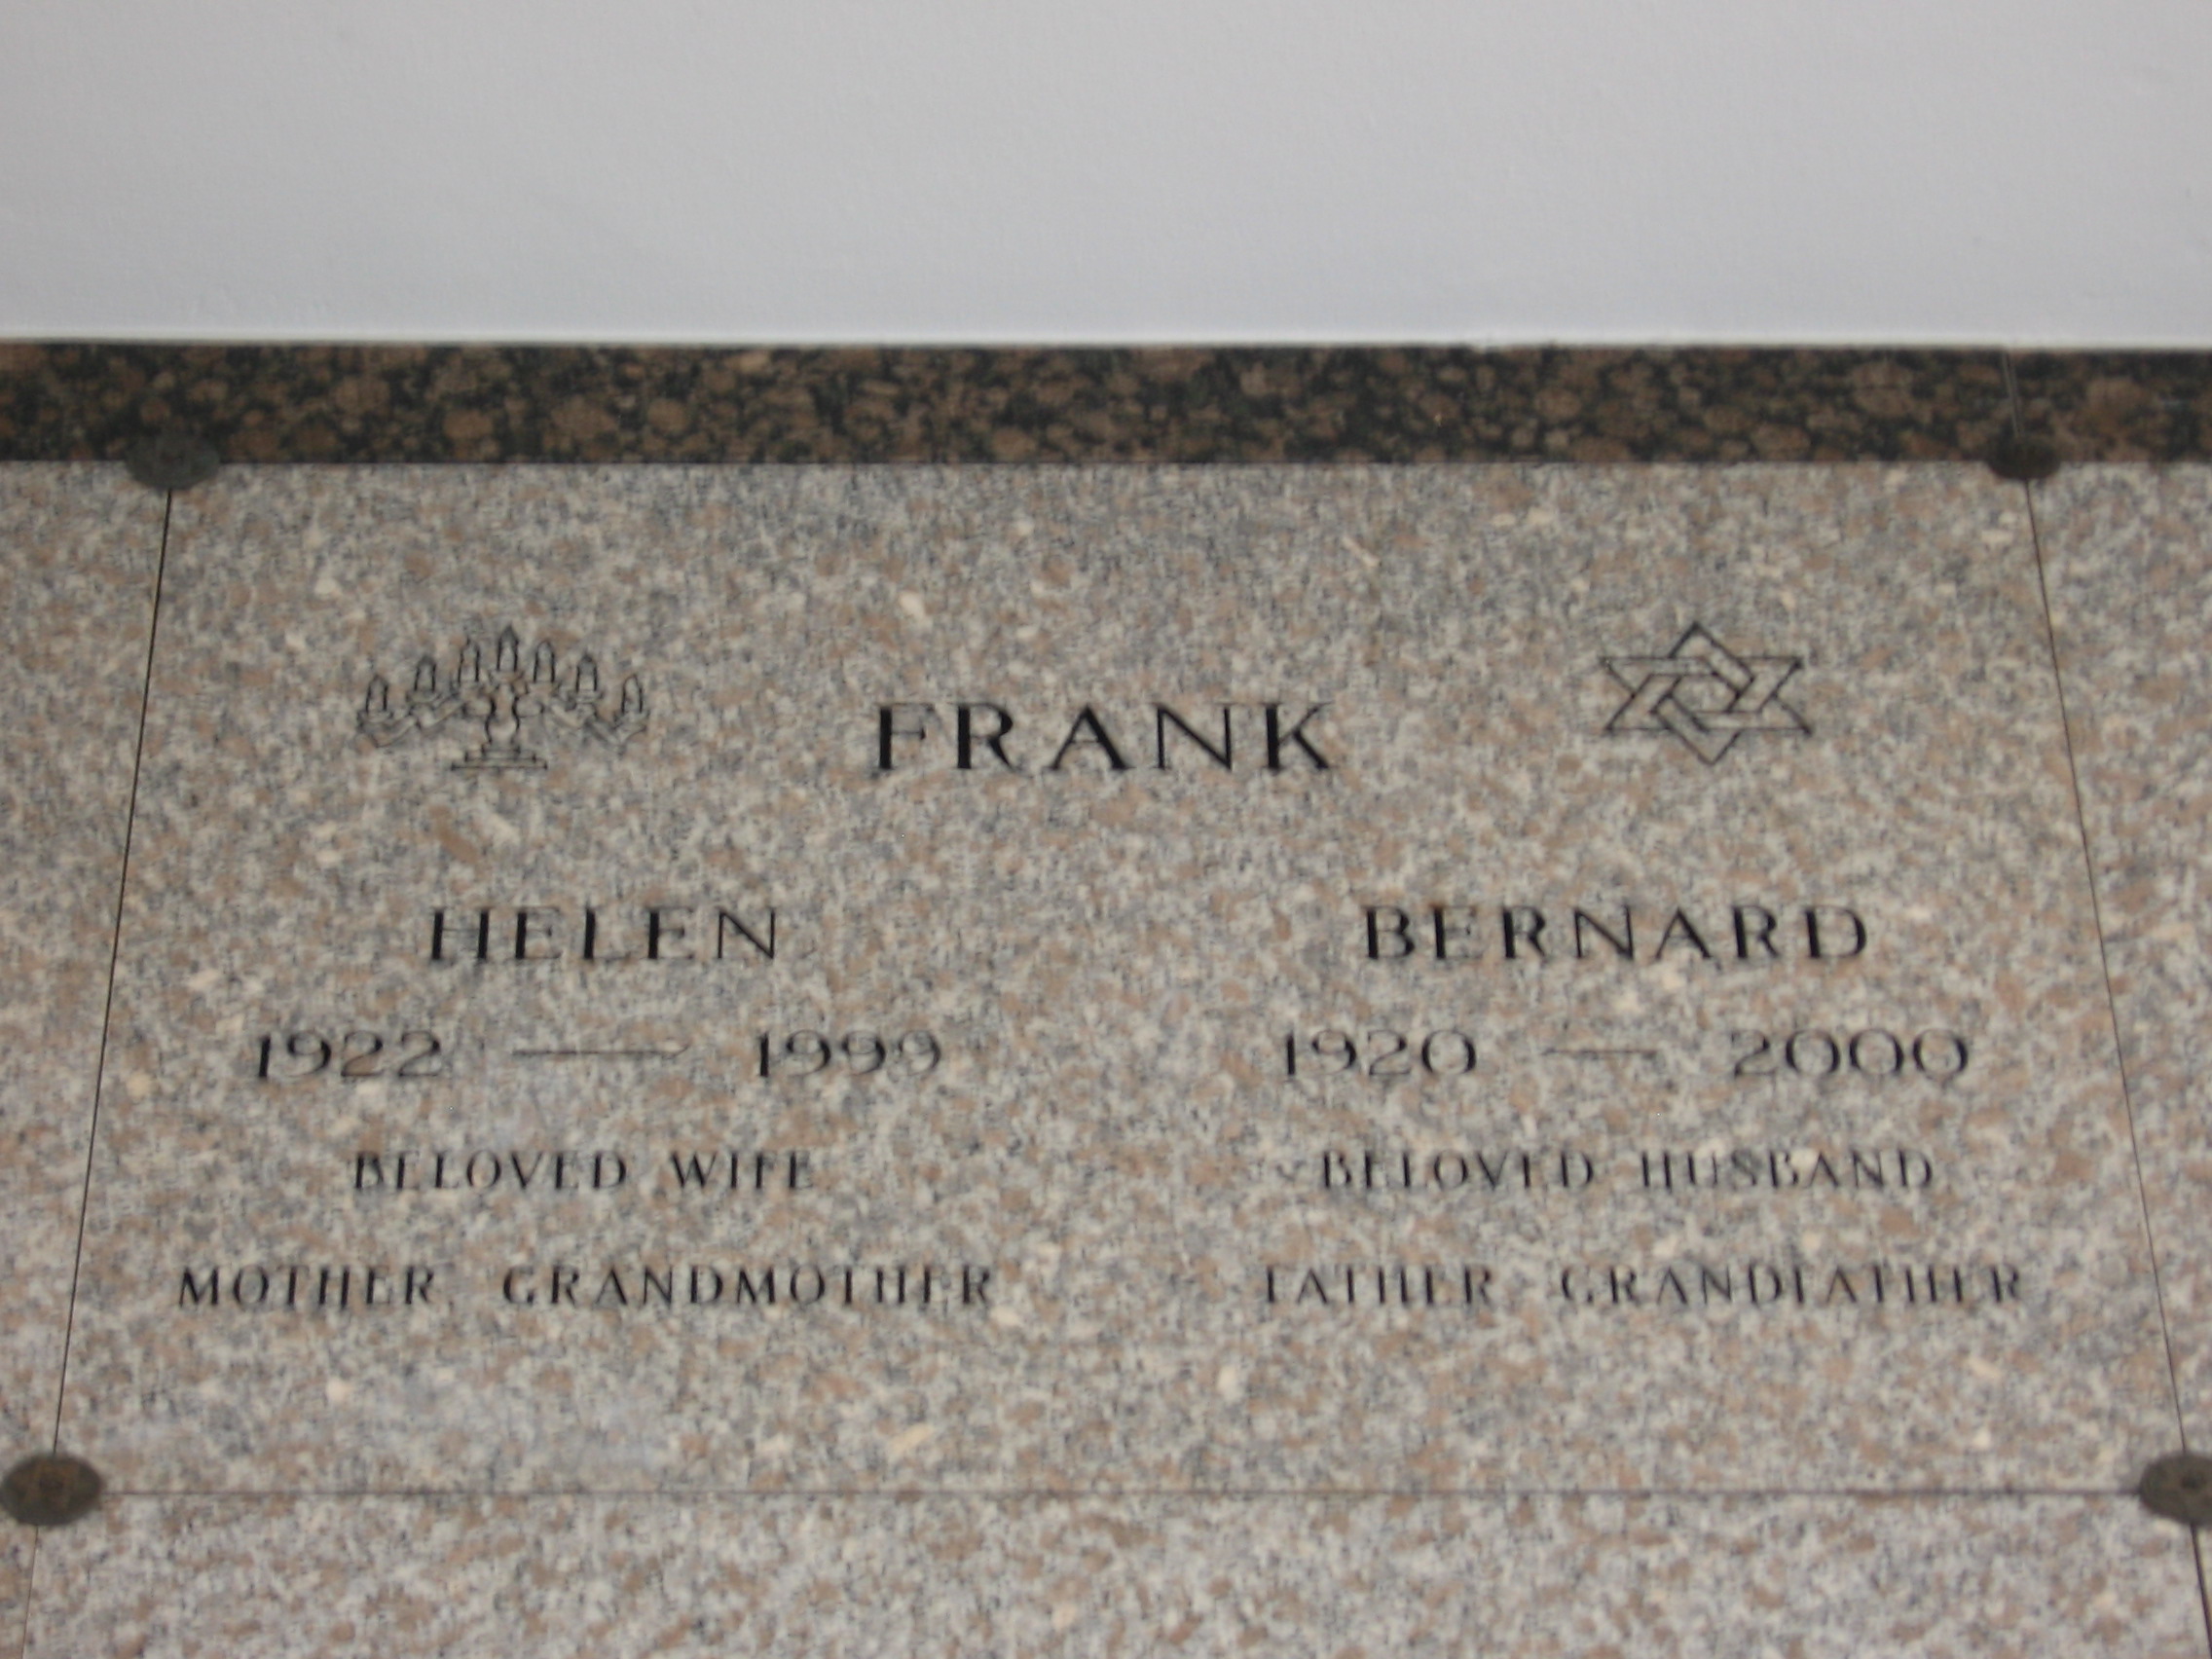 Bernard Frank